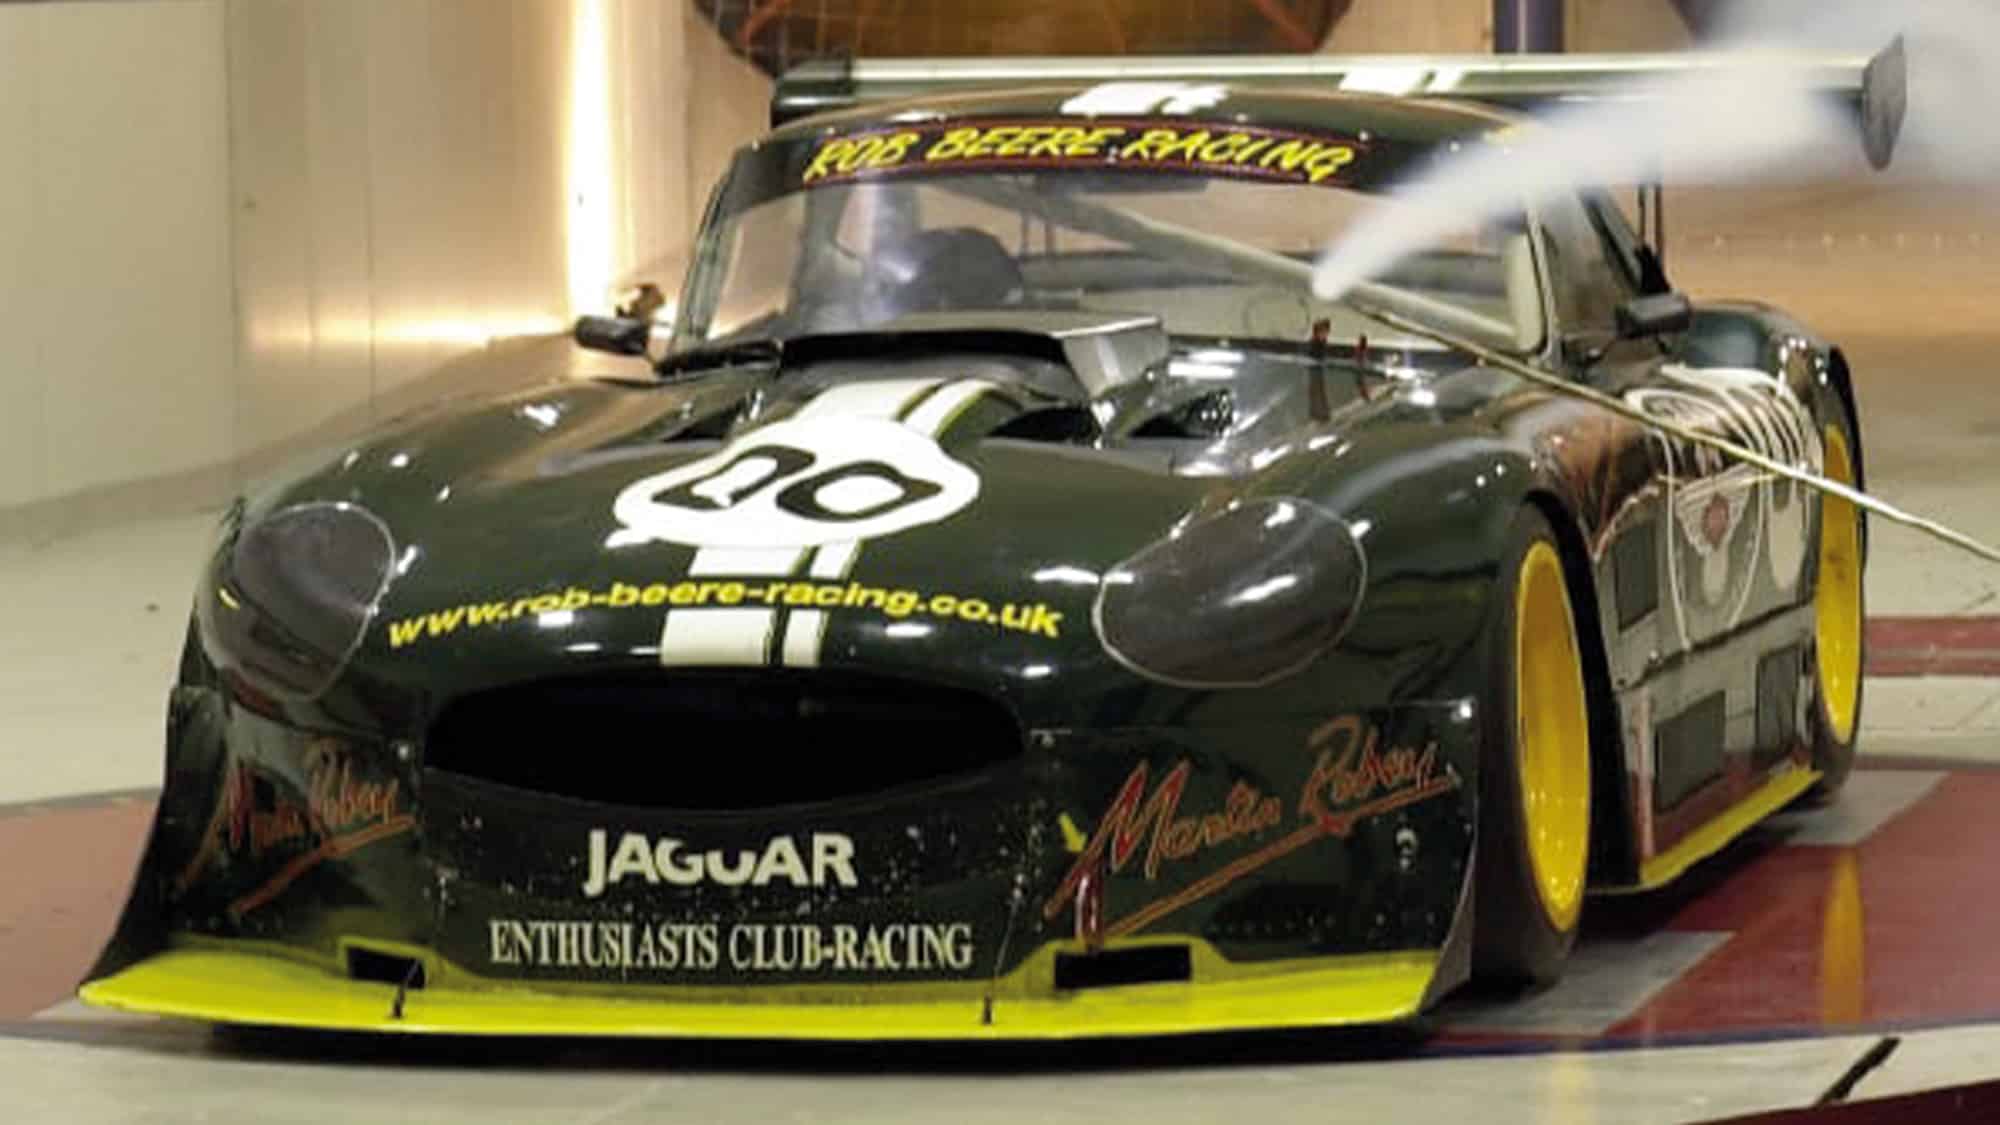 The world's fastest Jaguar E-type: one quick cat - Motor Sport